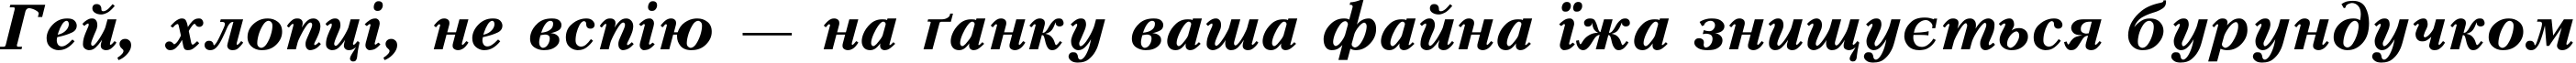 Пример написания шрифтом Peterburg Bold Italic текста на украинском